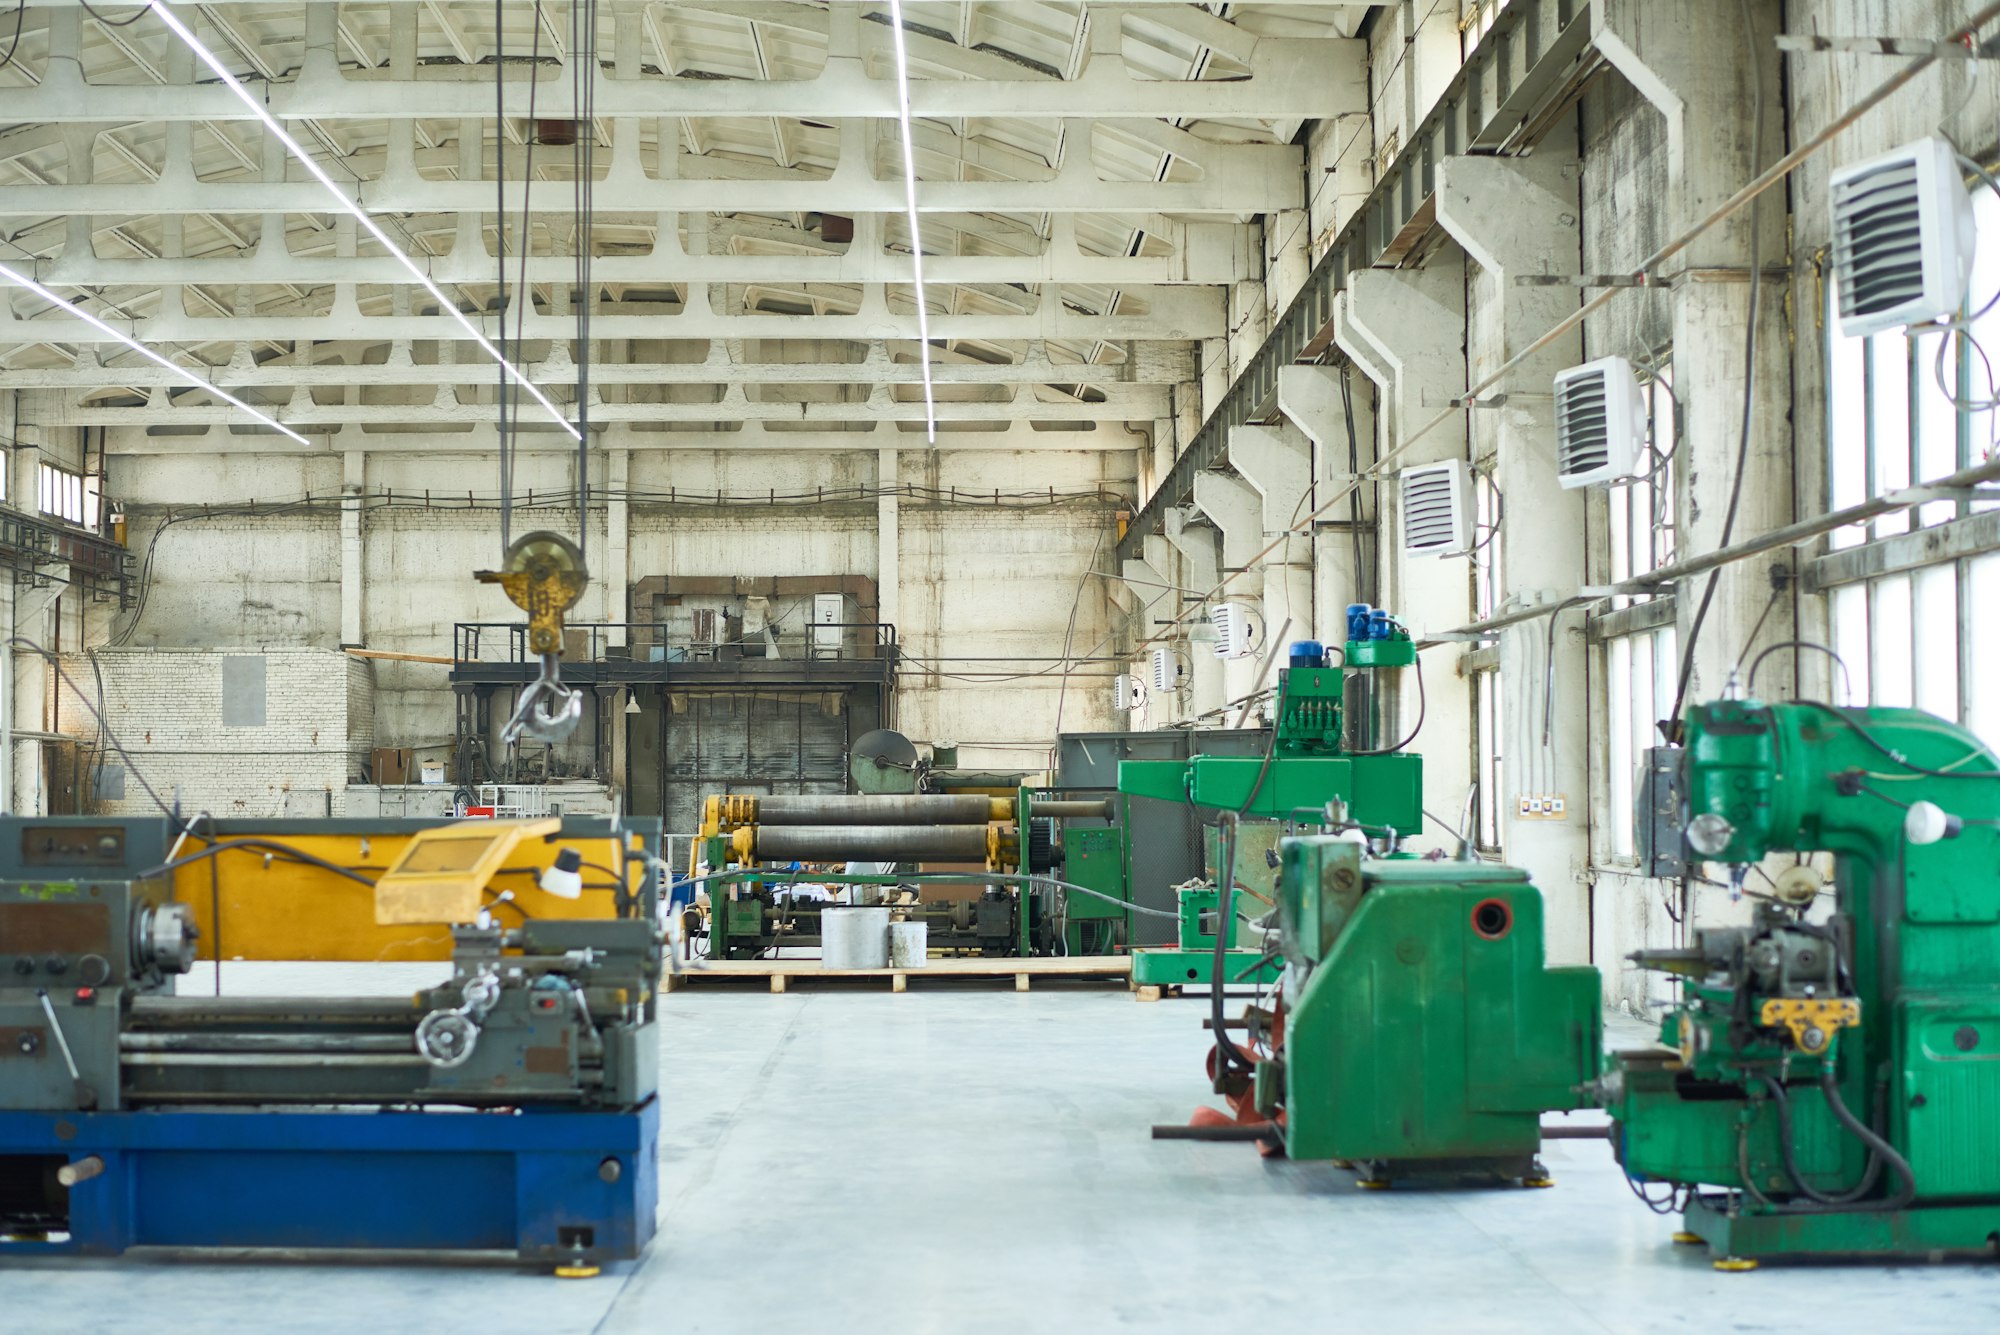 Modern industrial workshop with machines